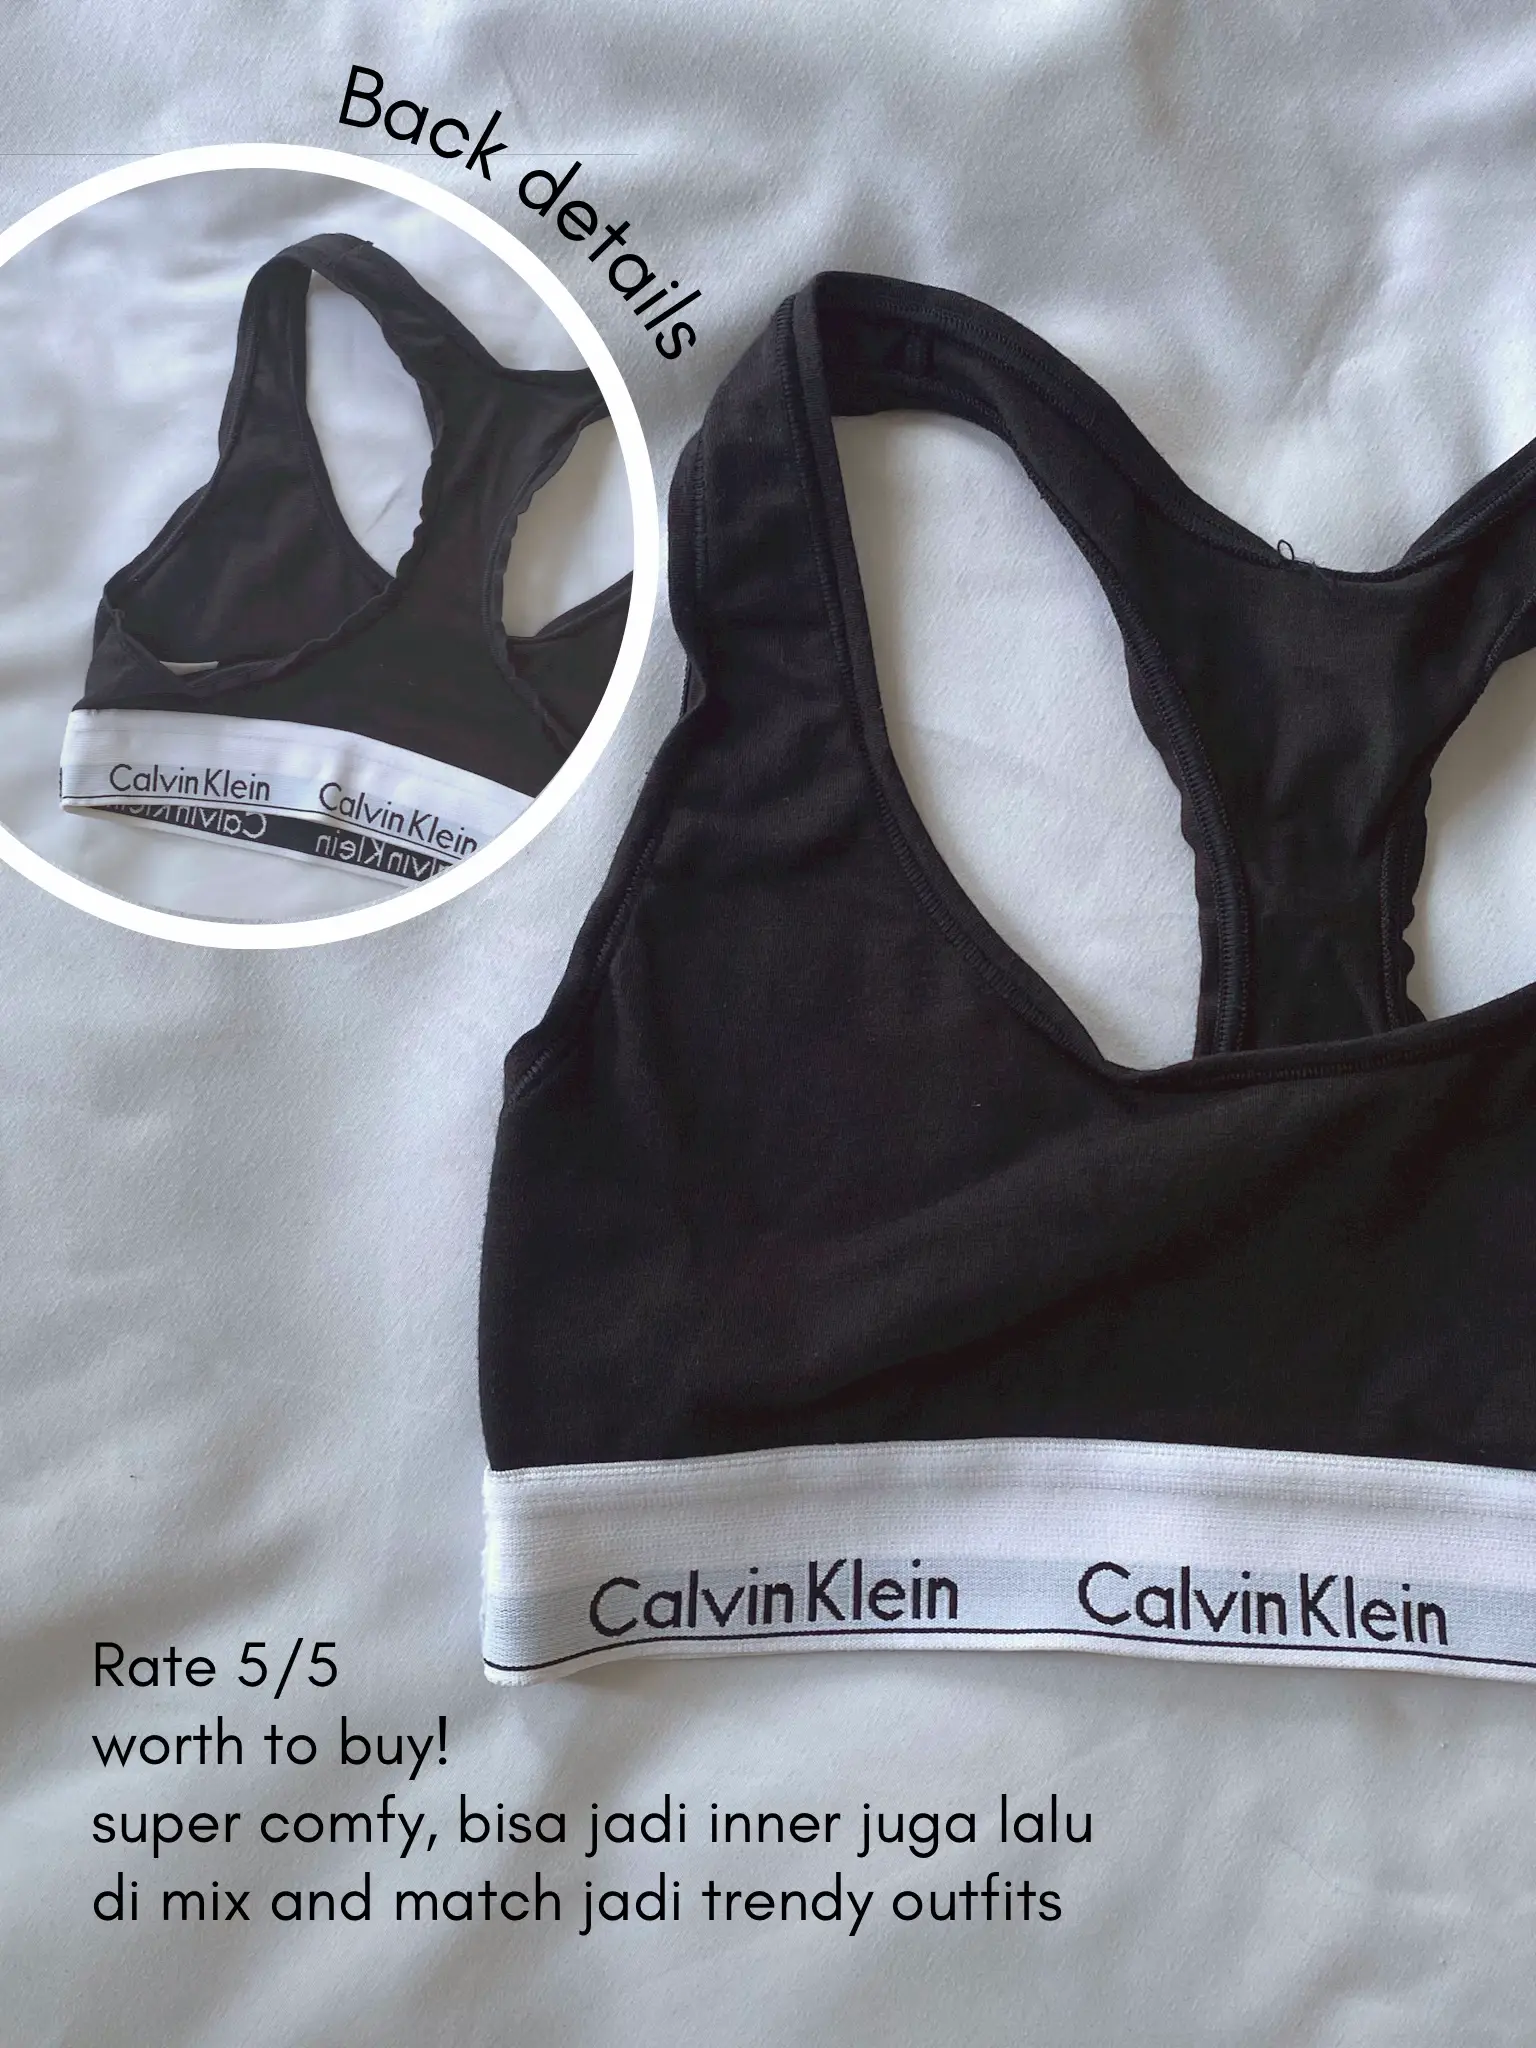 Calvin Klein Bralette Review, price, outfit inspo